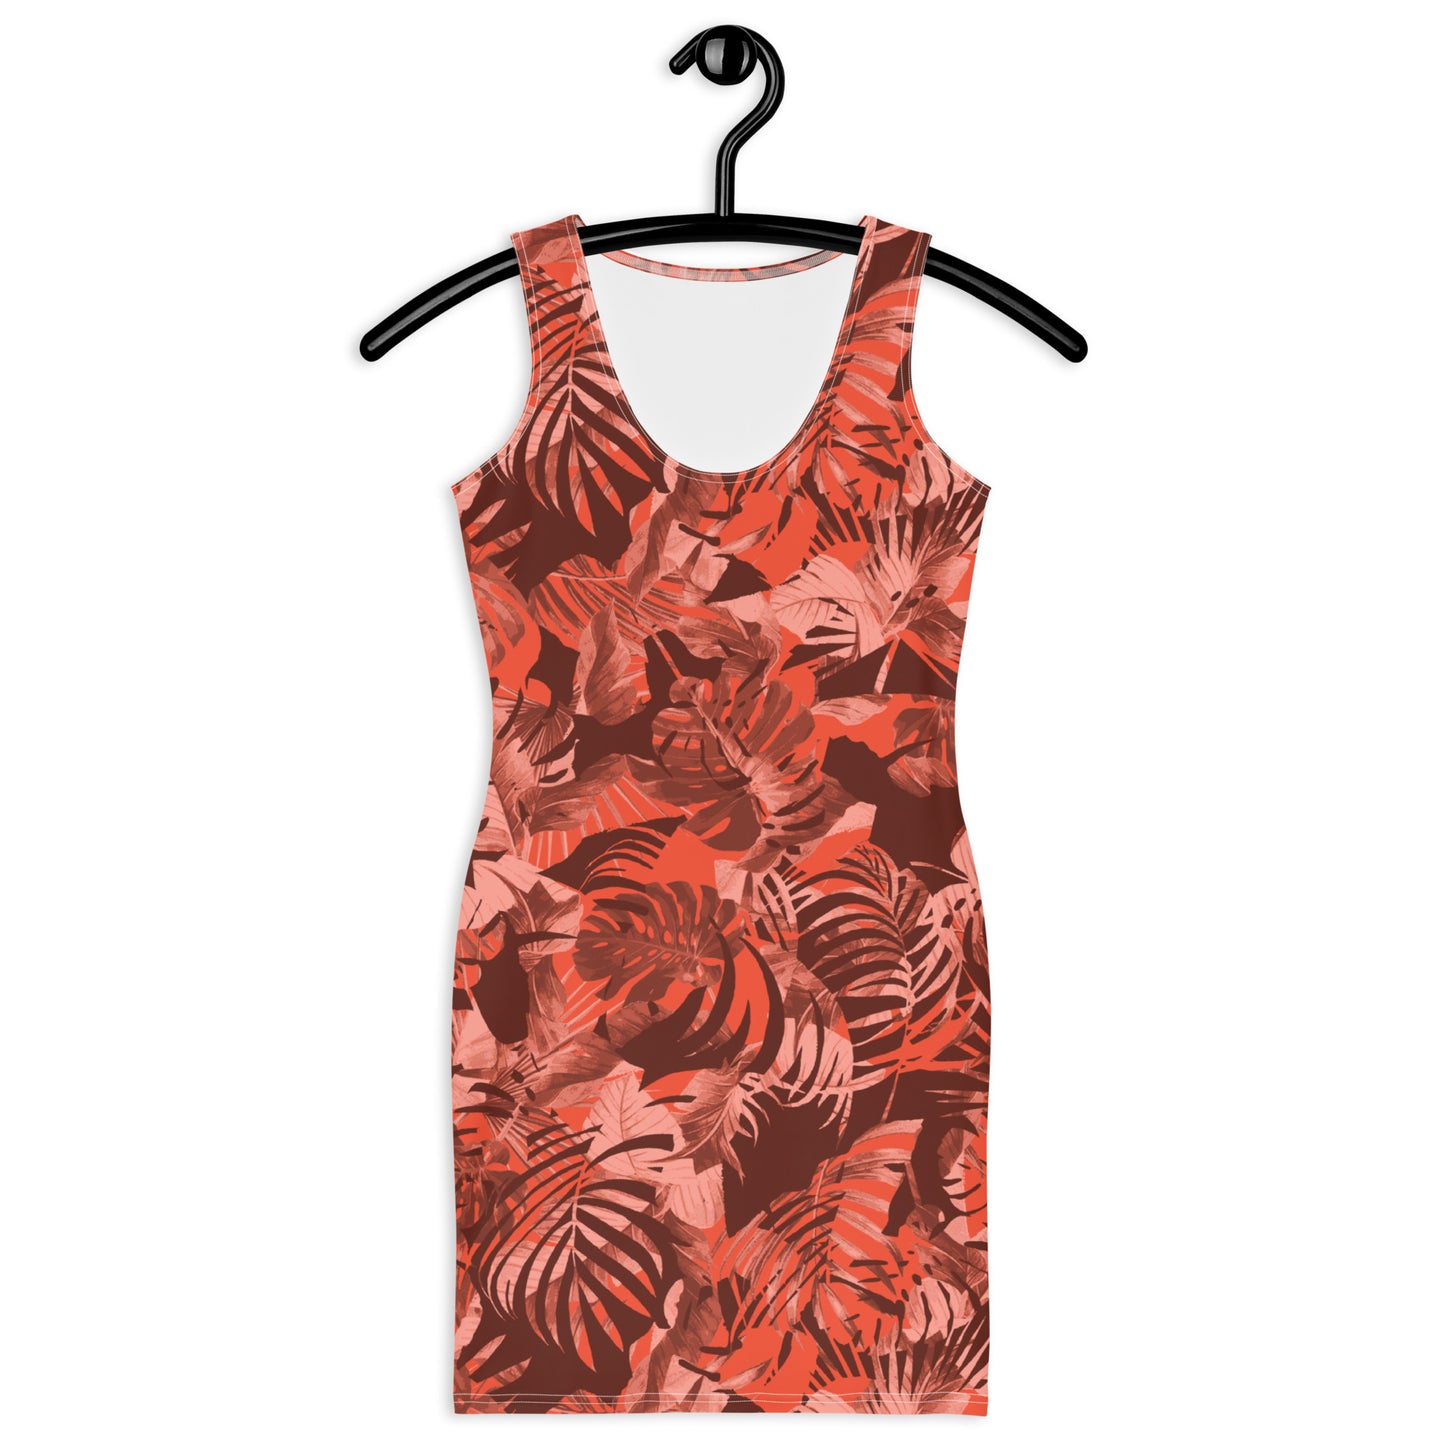 "Earth Goddess" Printed Dress-Brown / Orange / Coral Combo